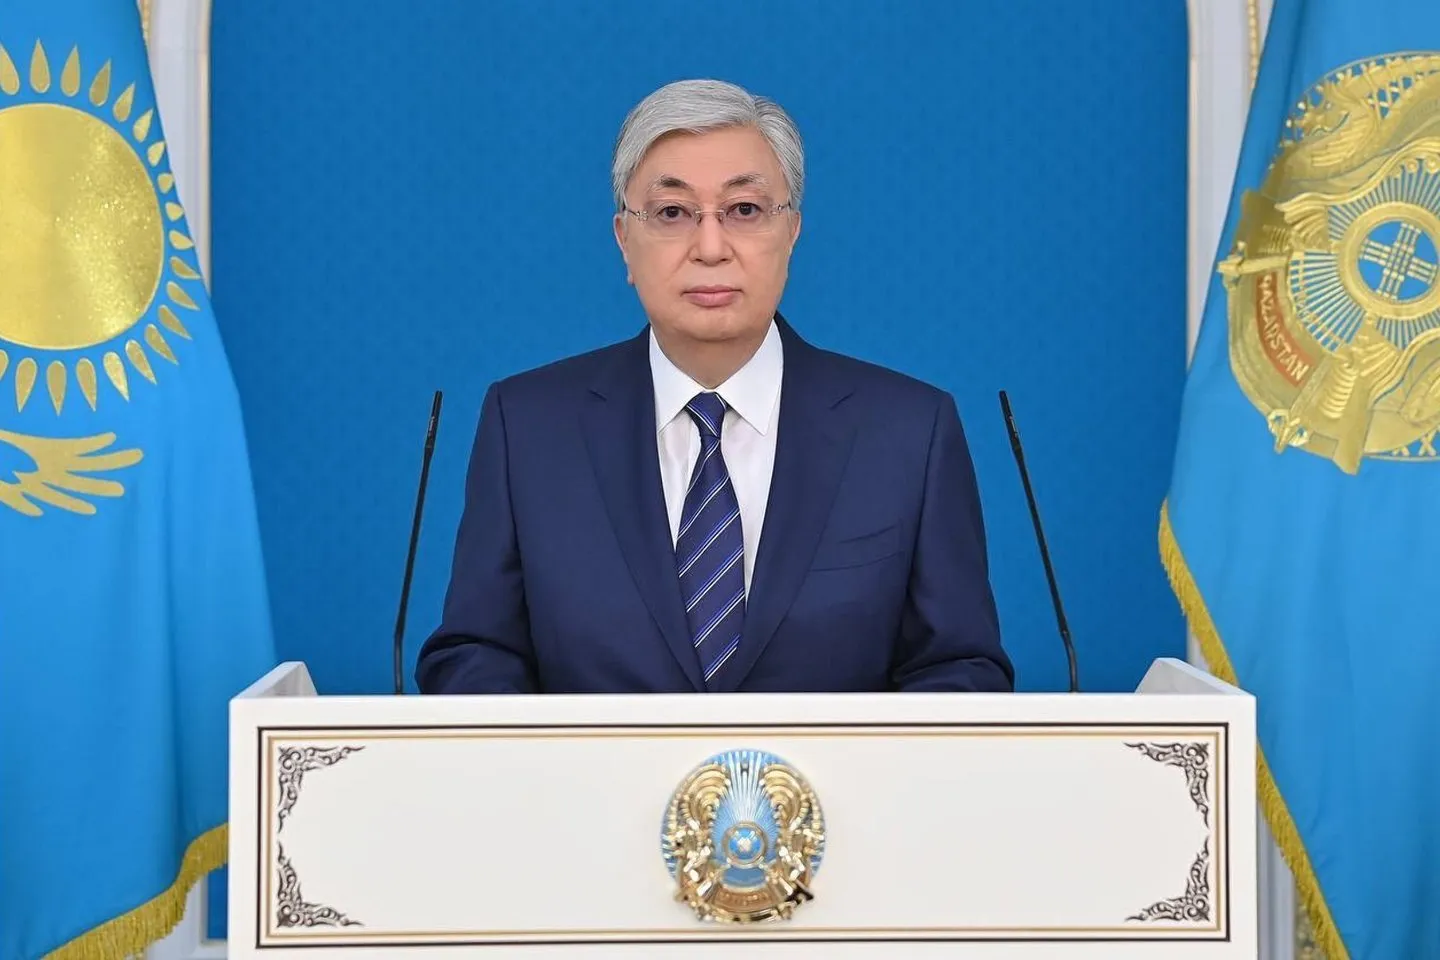 Новости Казахстана / Общество в Казахстане / Президент Казахстана поздравил граждан с Днем единства народа